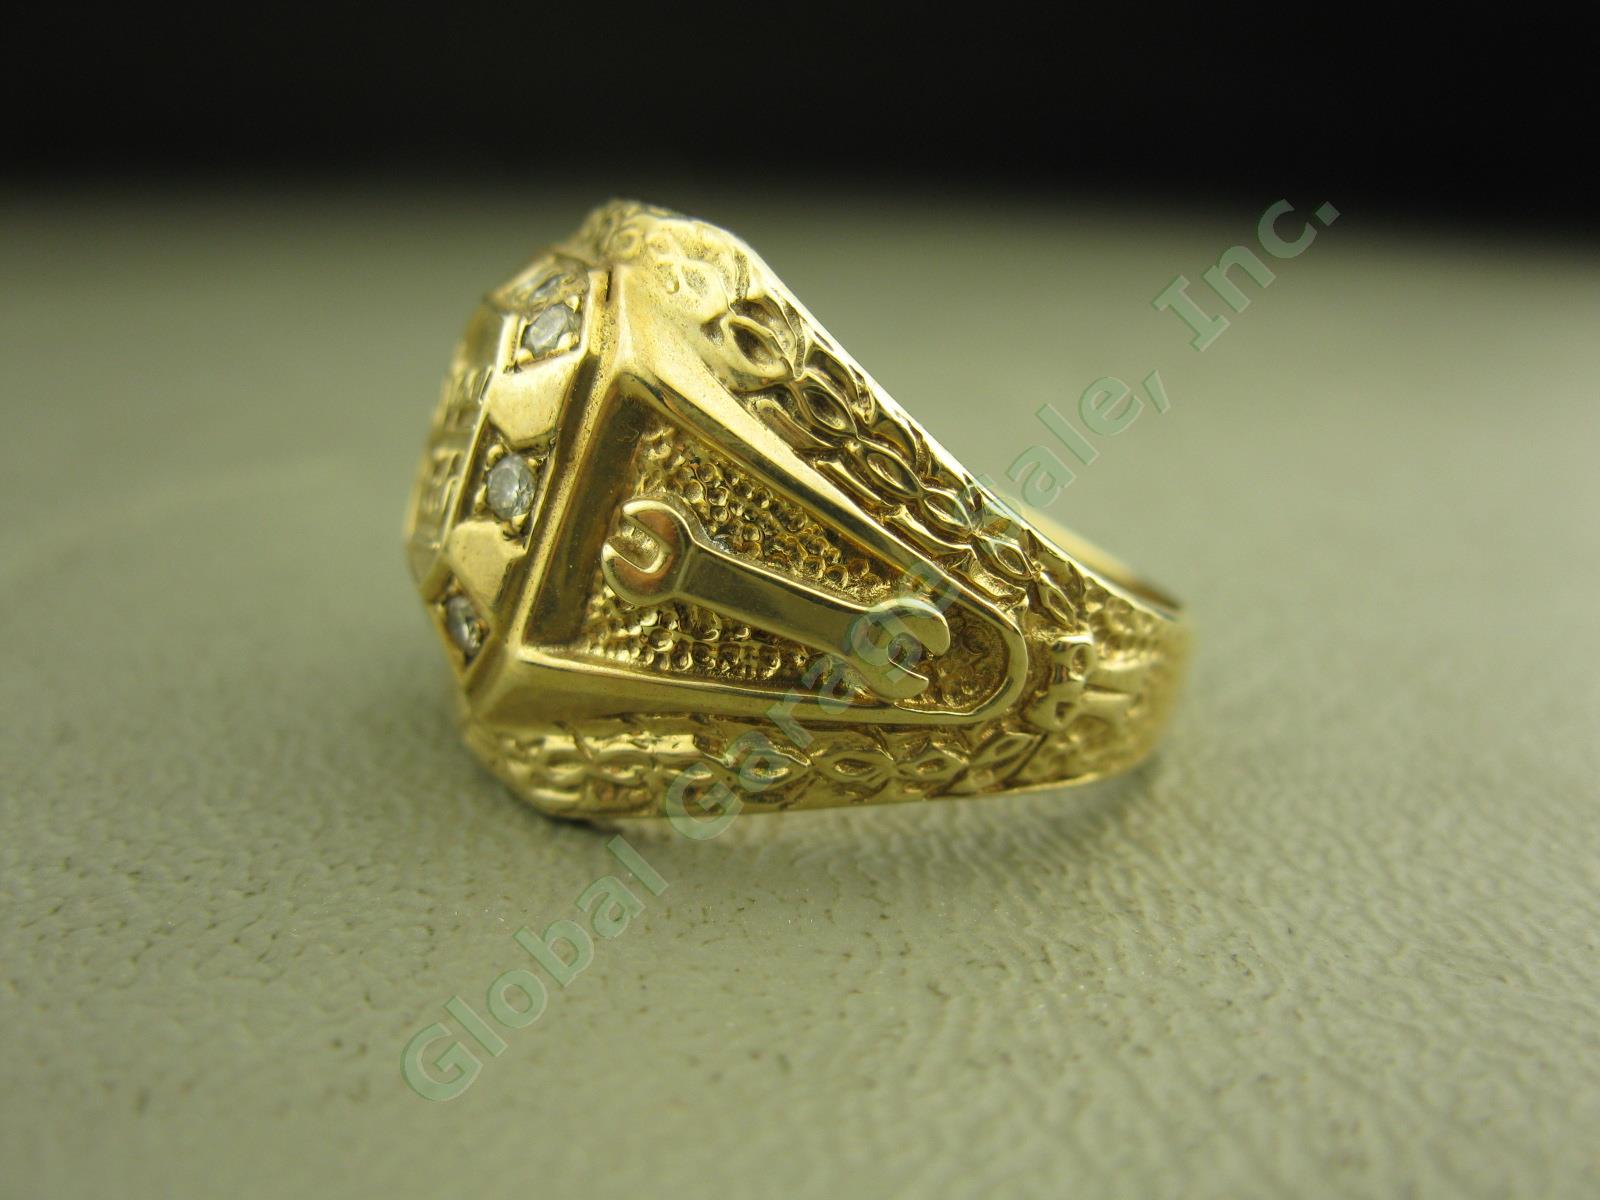 Snap-On Tools Dealer Sales Award 10K Gold Ring W/9 Diamonds 13.8 Gram Size 10.75 2